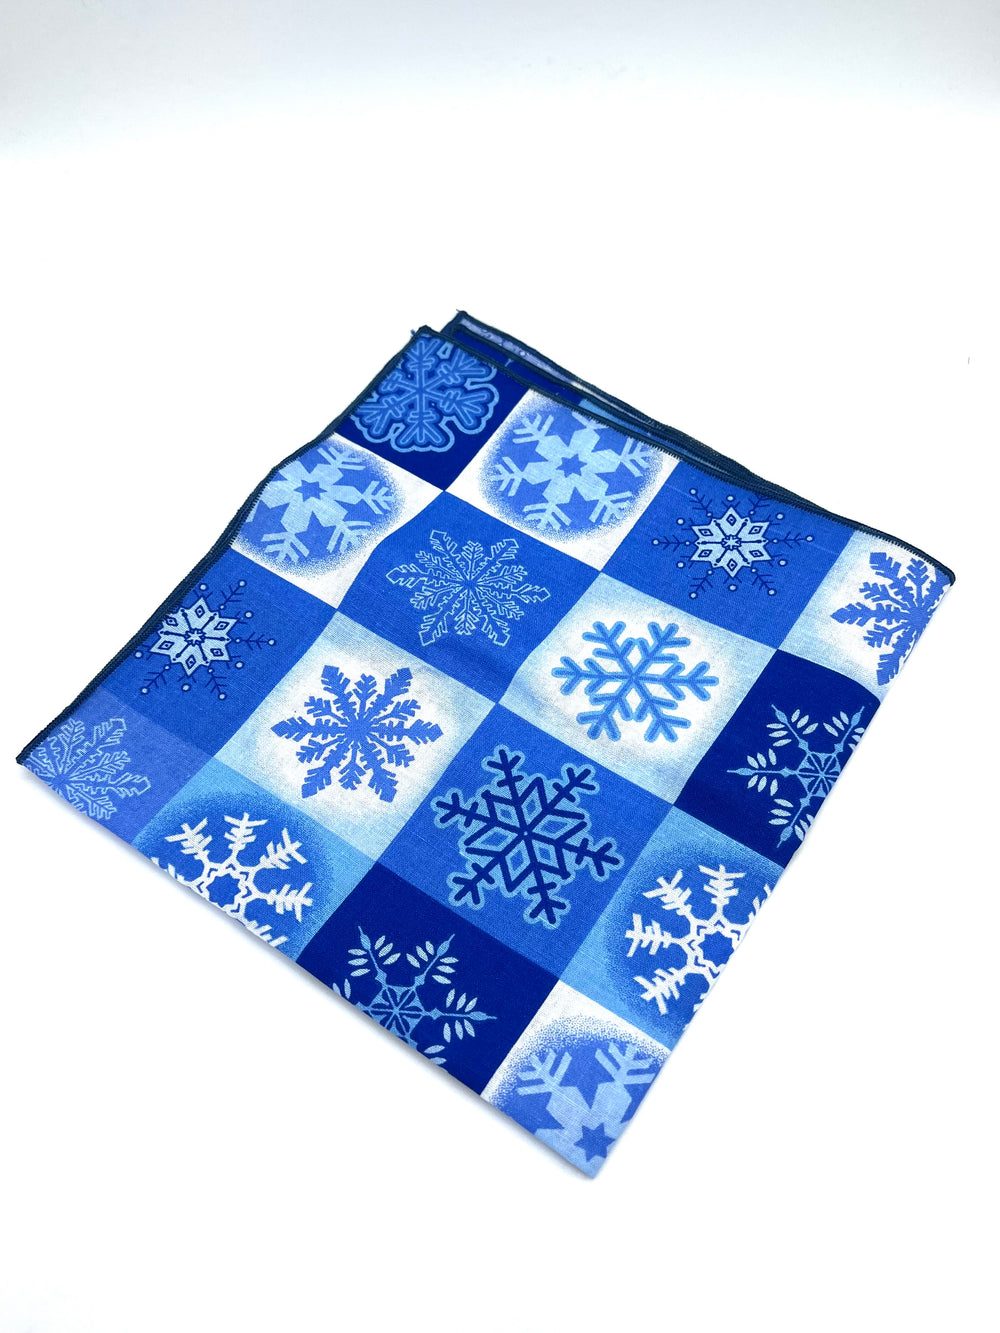 The Snowflake Handkerchief